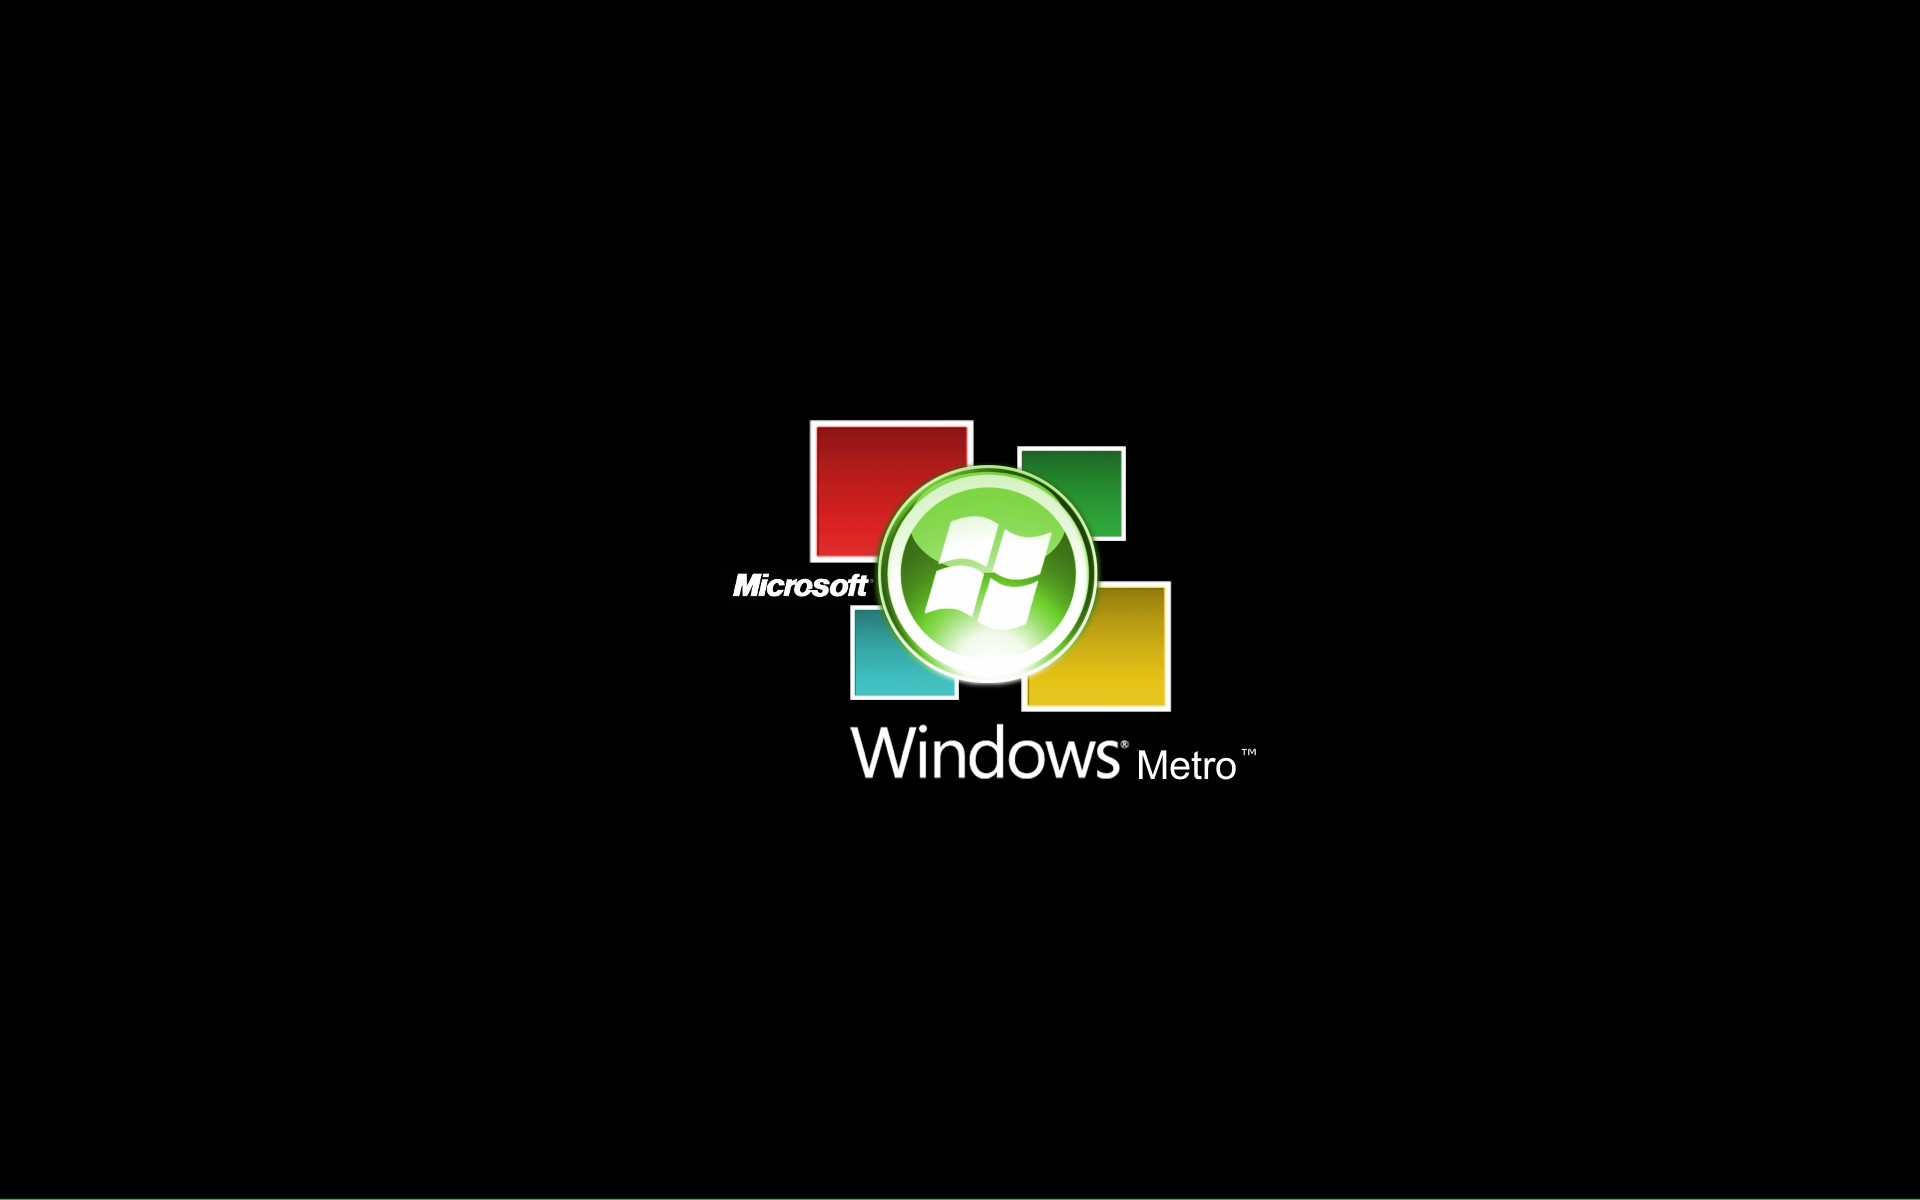 1920x1200 Image: Windows Metro logo wallpapers and stock photos. Â«